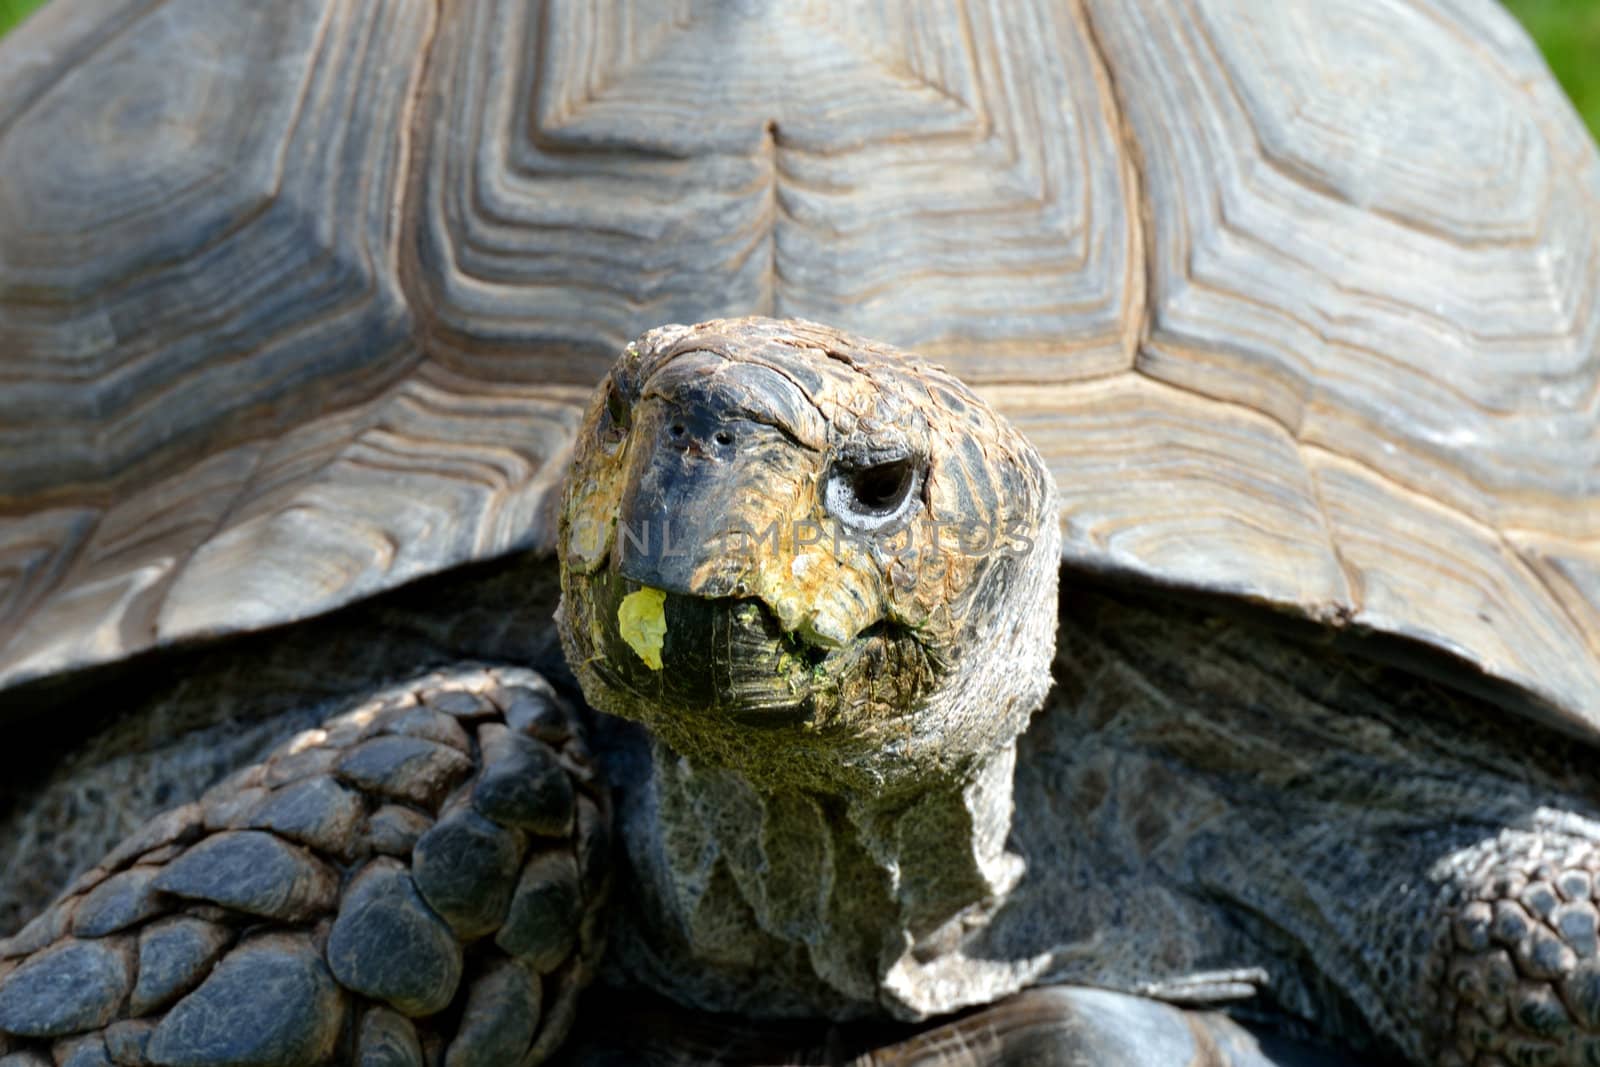 Tortoise head in close up